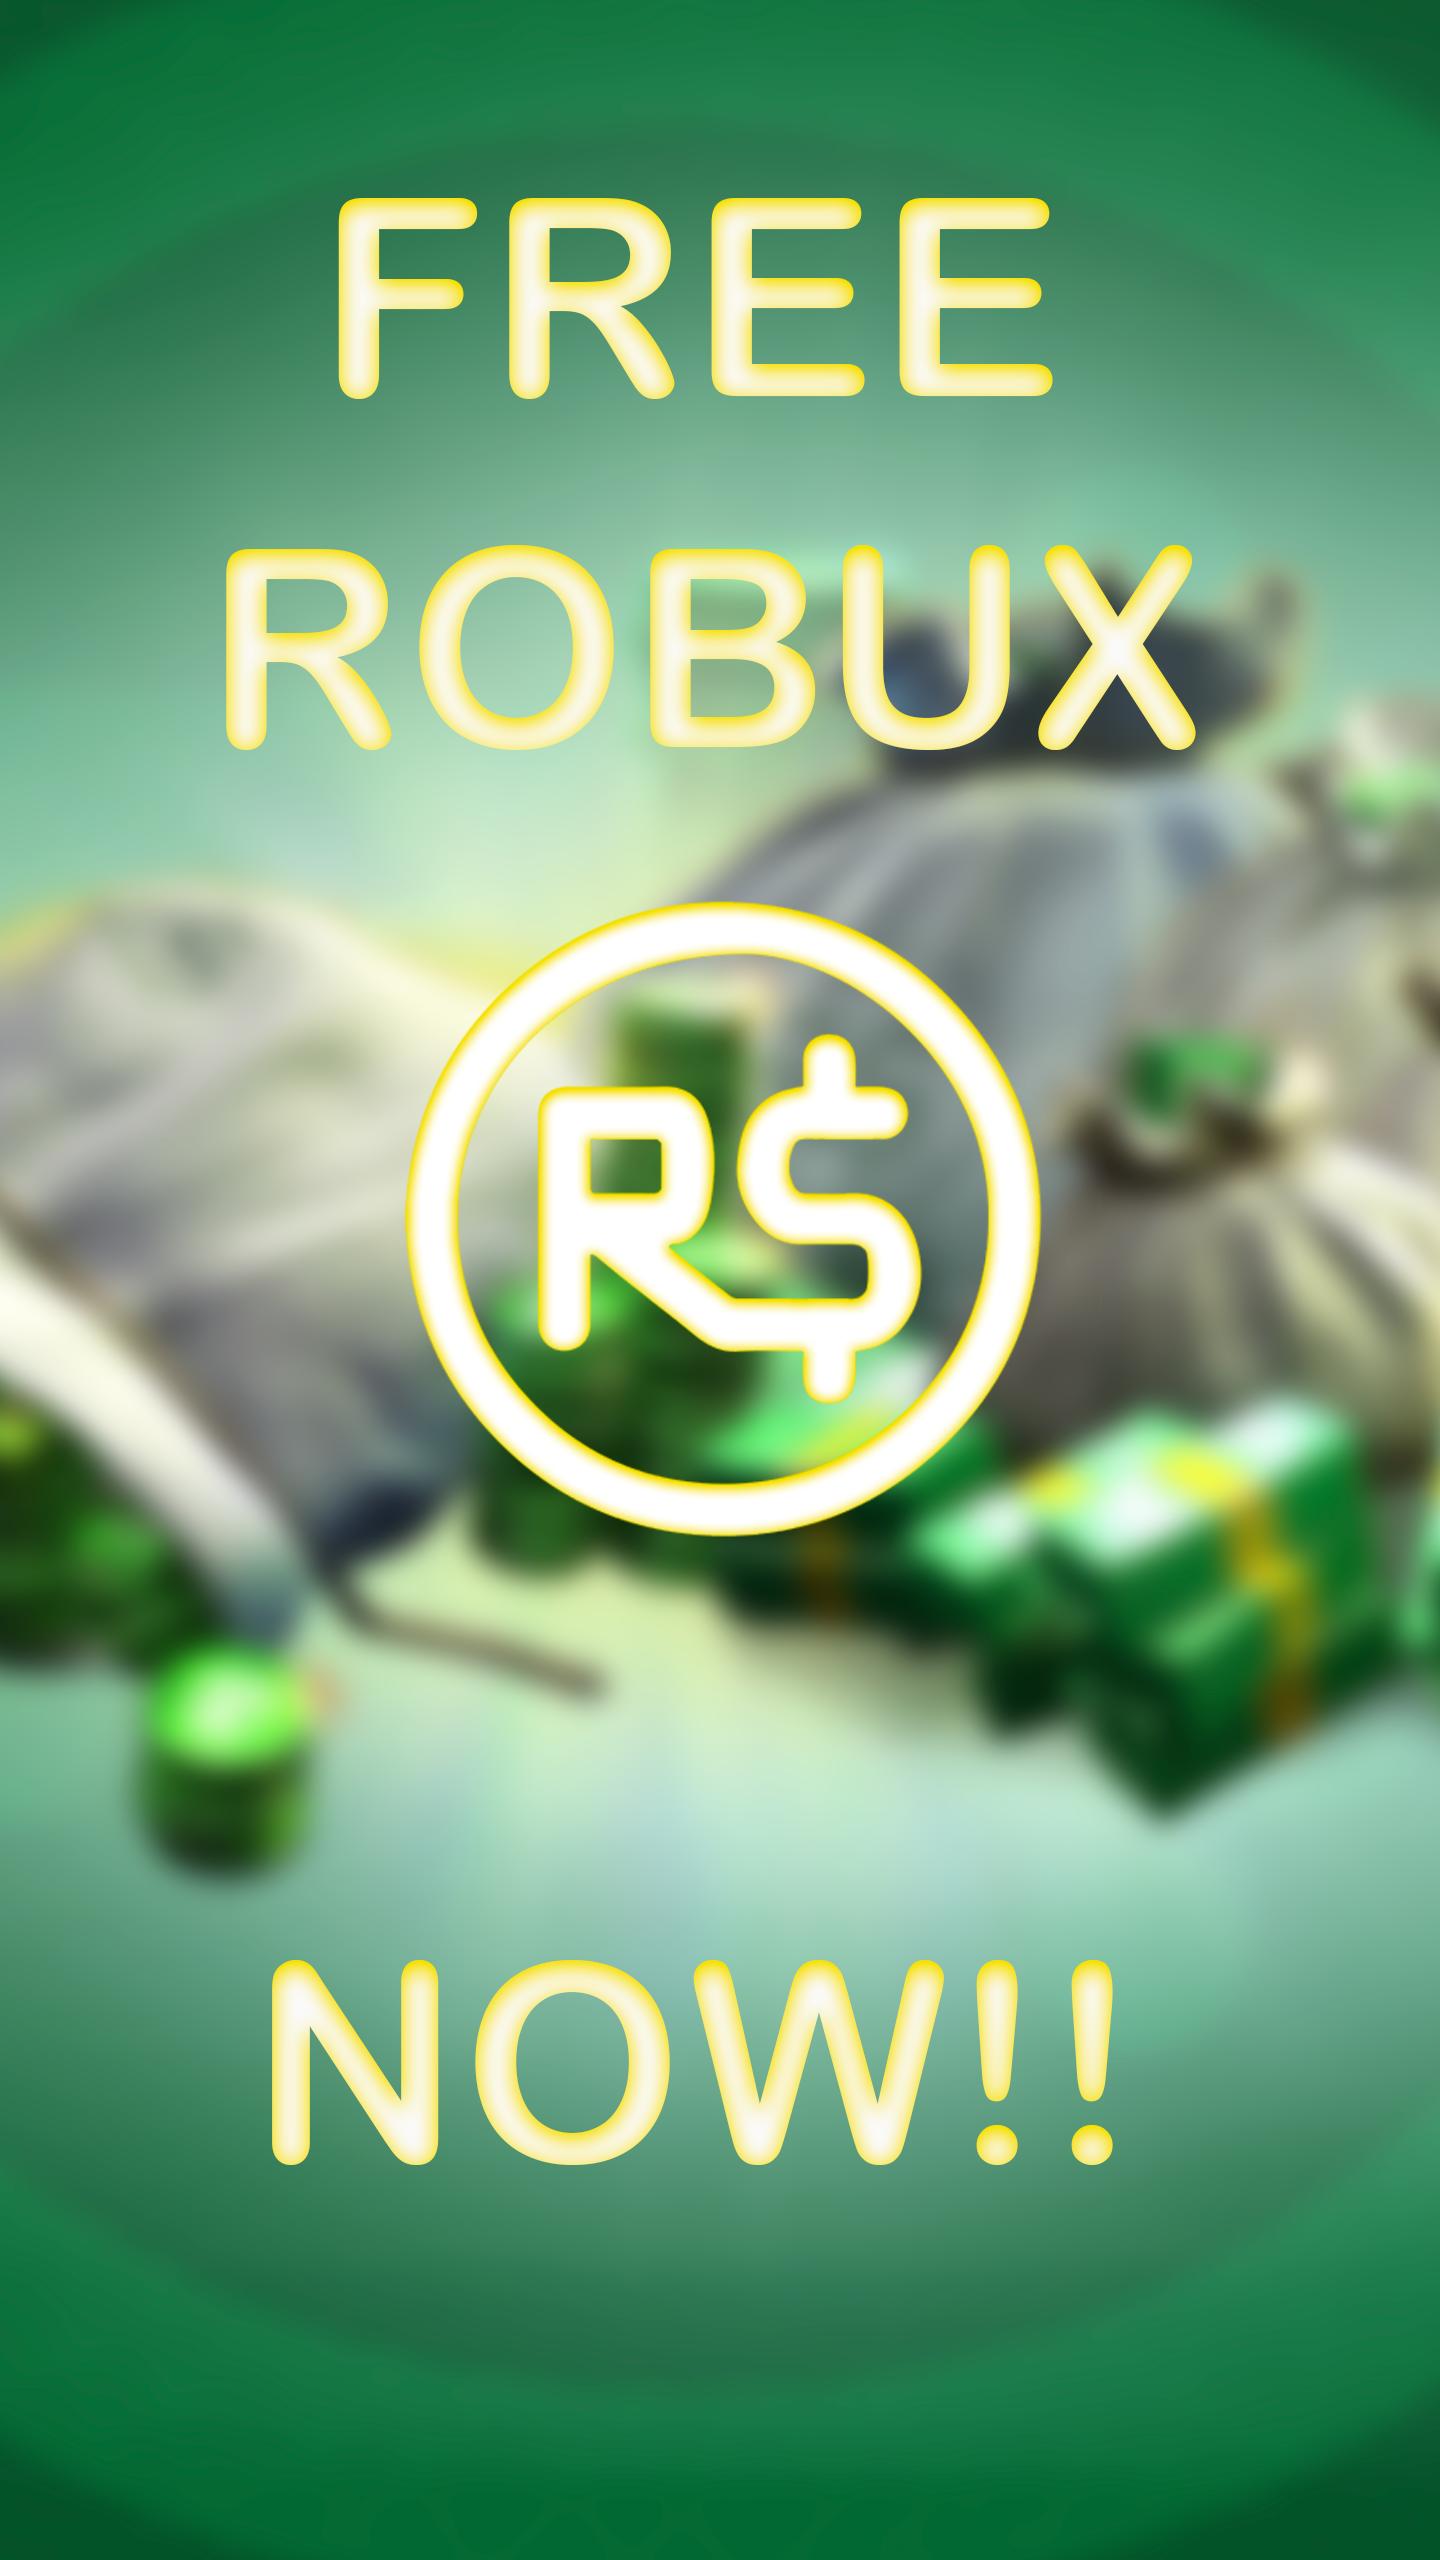 Robux Gratis 2019 Como Ganar Robux Gratis Ahora For Android Apk Download - como ghanar robux